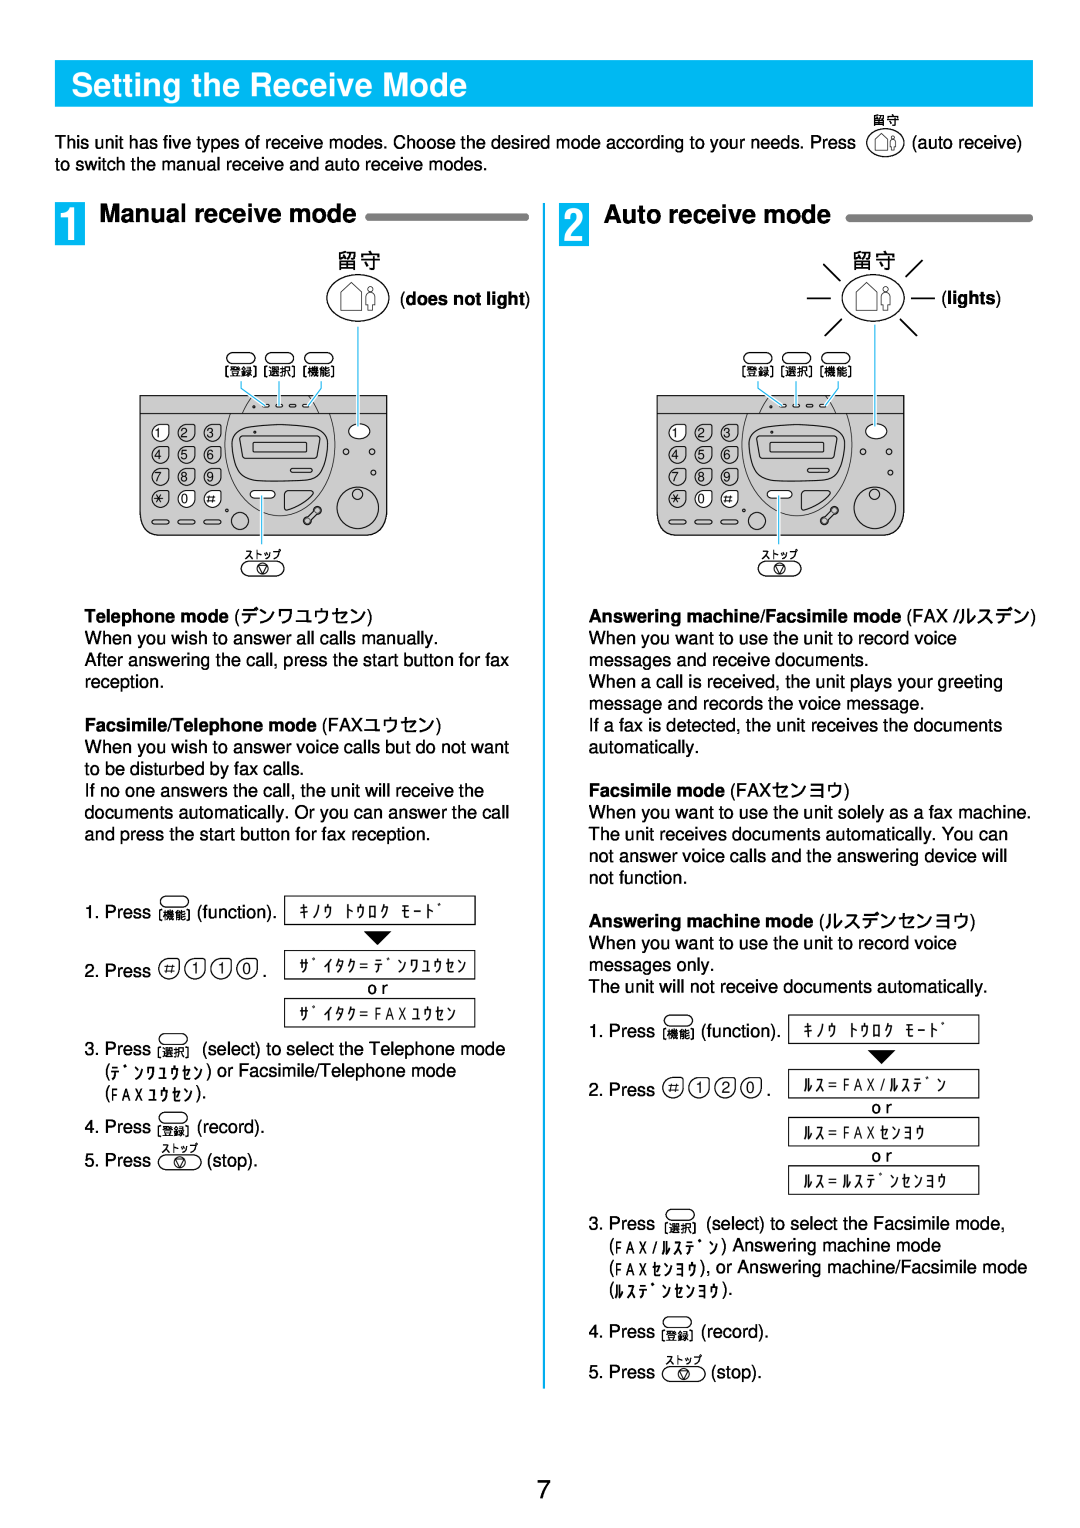 Panasonic KX-PW30CL manual Setting the Receive Mode, Manual receive mode, Auto receive mode, does not light, lights 